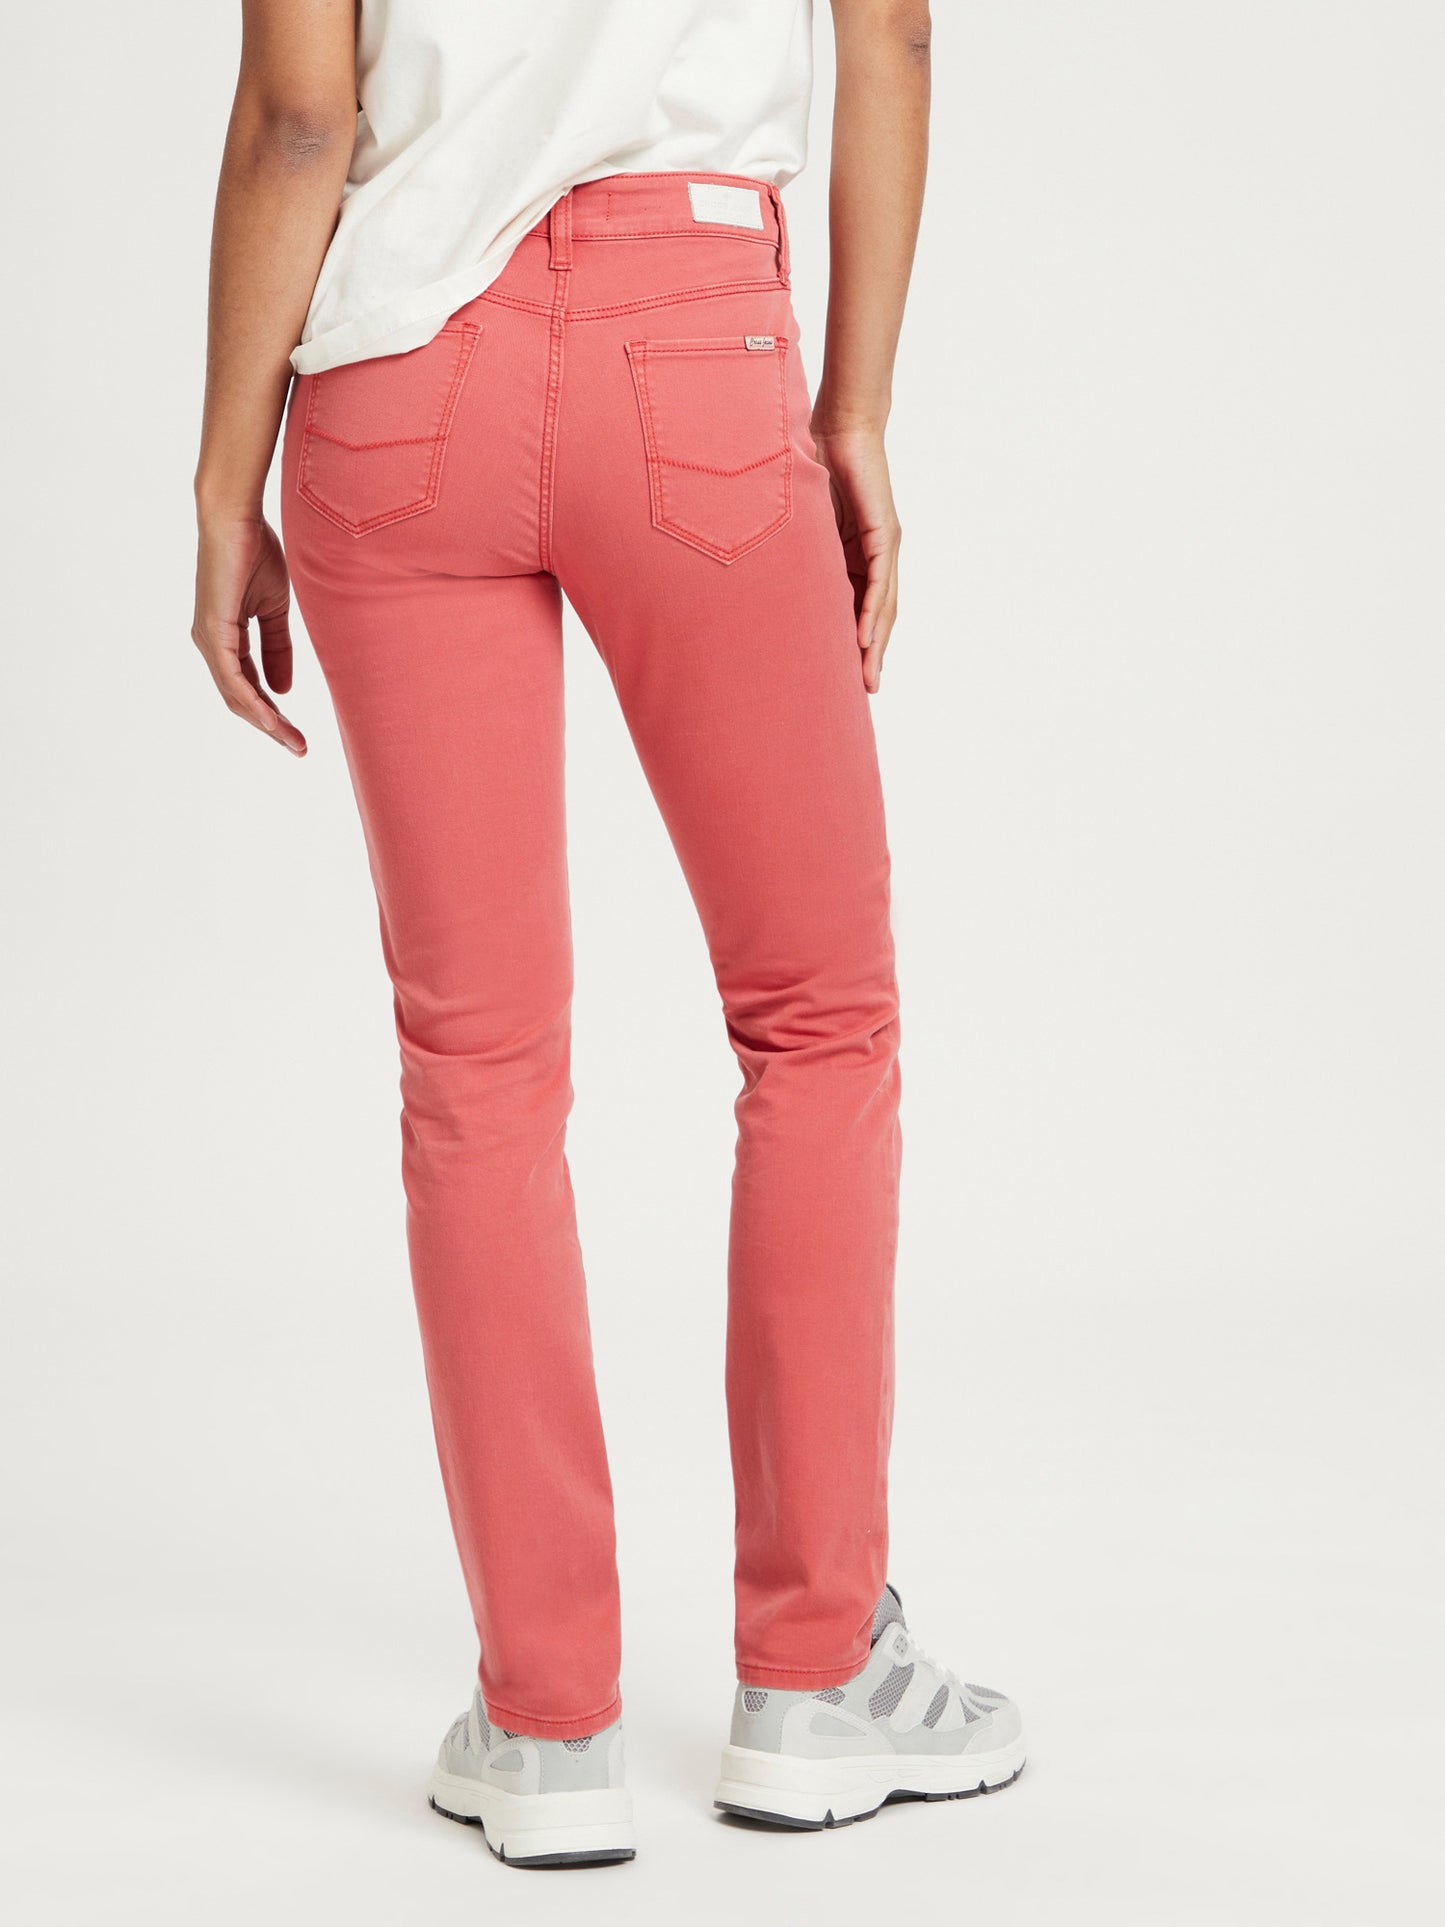 Anya women's jeans slim fit high waist vintage red